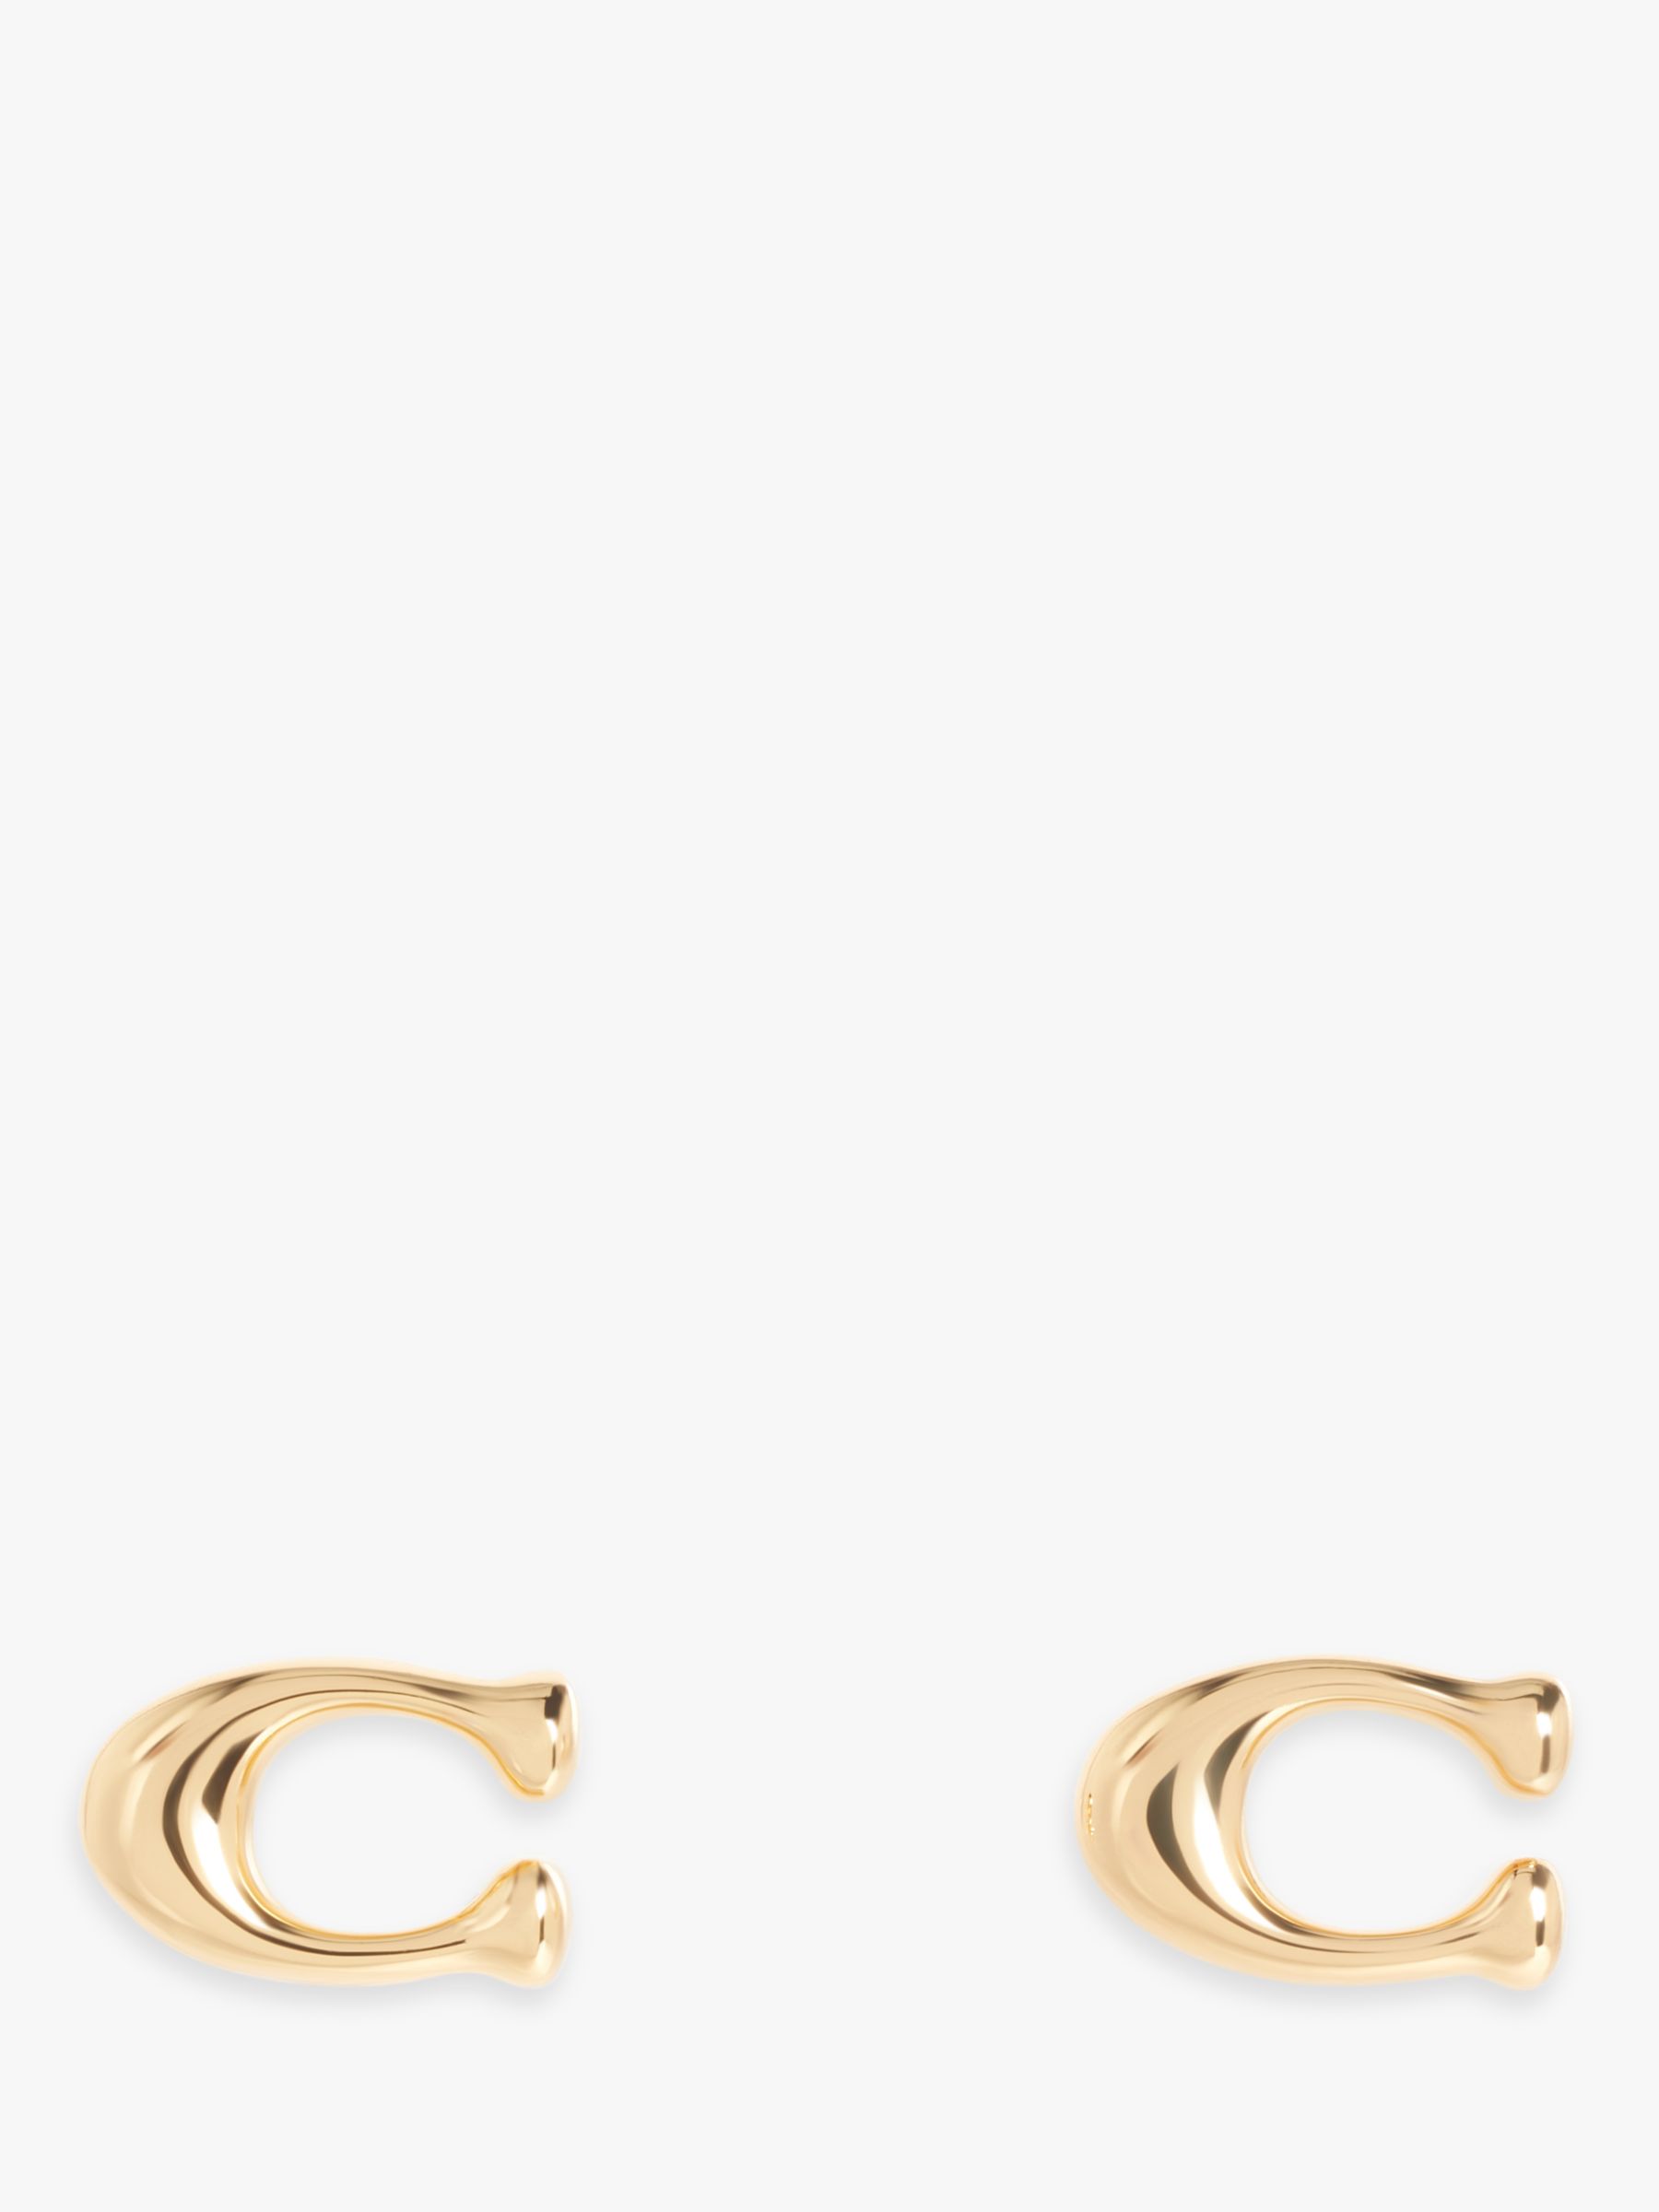 Coach Signature Stud Earrings, Gold at John Lewis & Partners